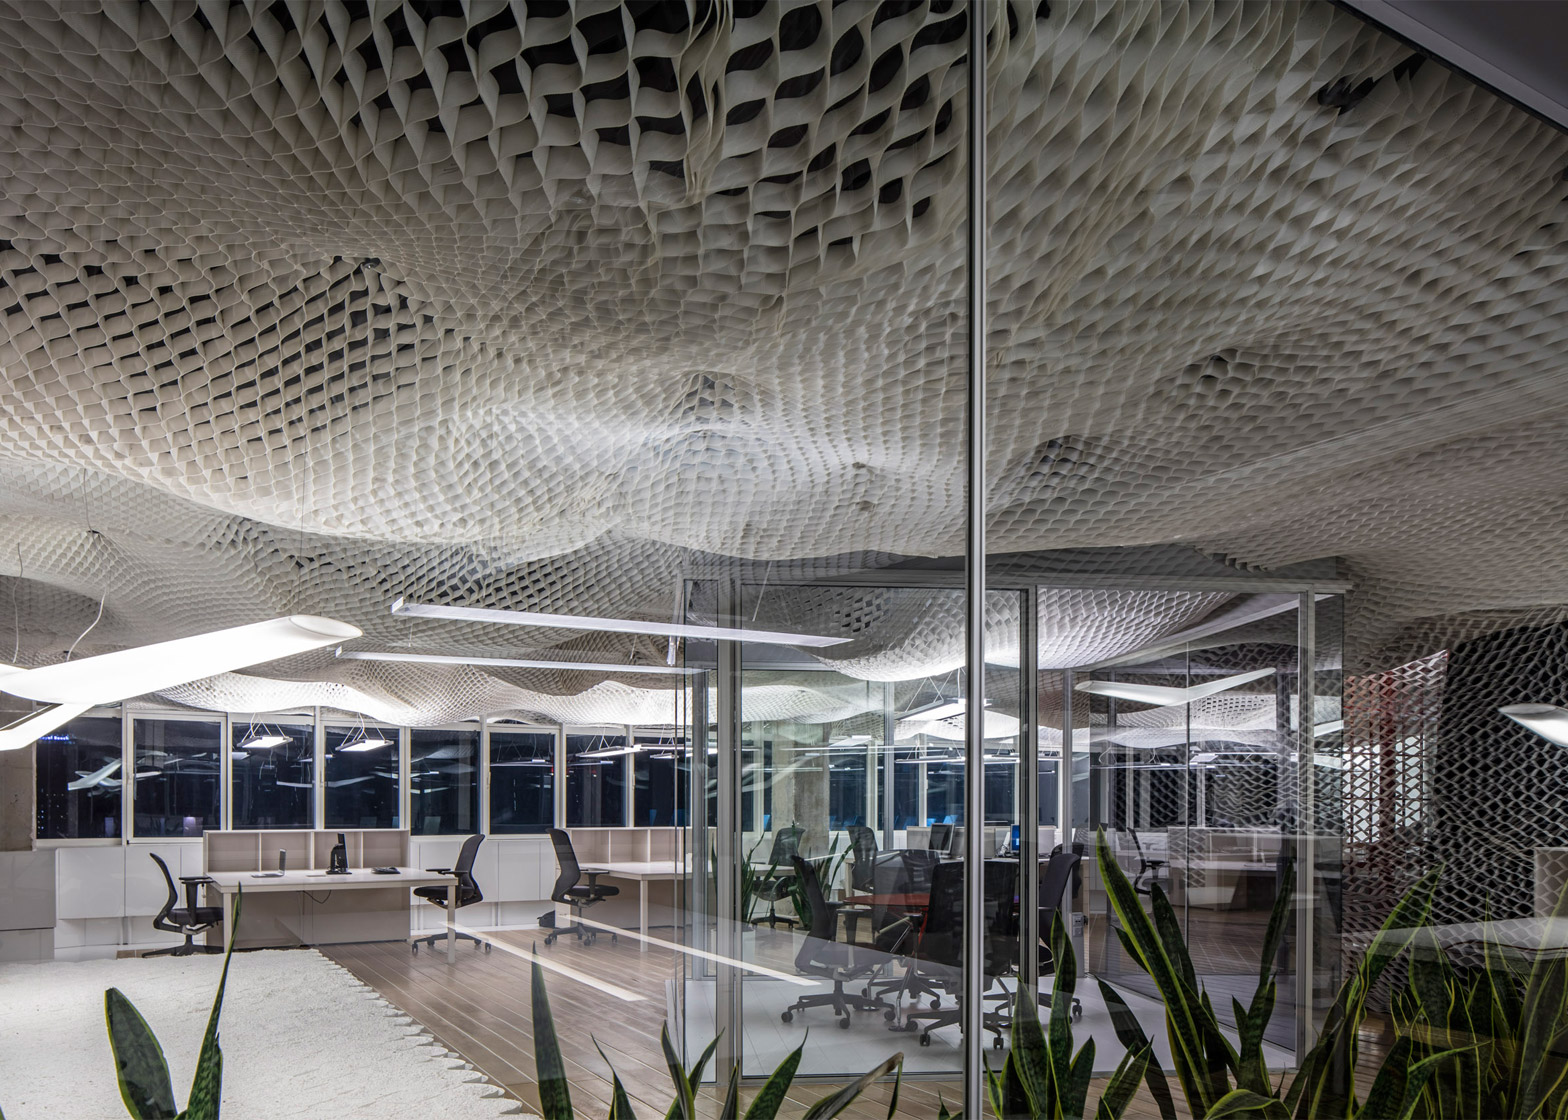 prs-offices-paritzki-liani-architects-interiors-ceiling-geo-cell-tel-aviv-israel-colour_dezeen_1568_6